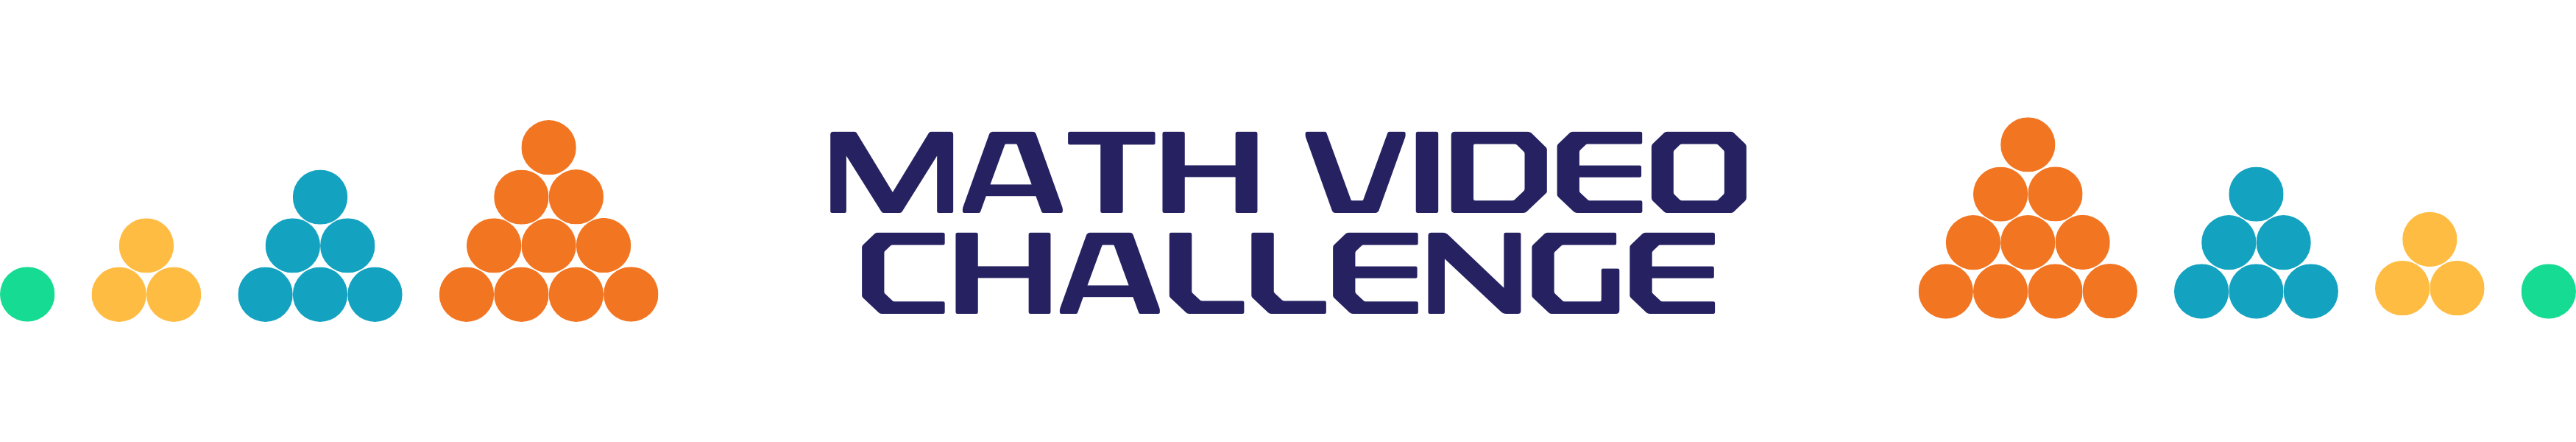 Math Video Challenge